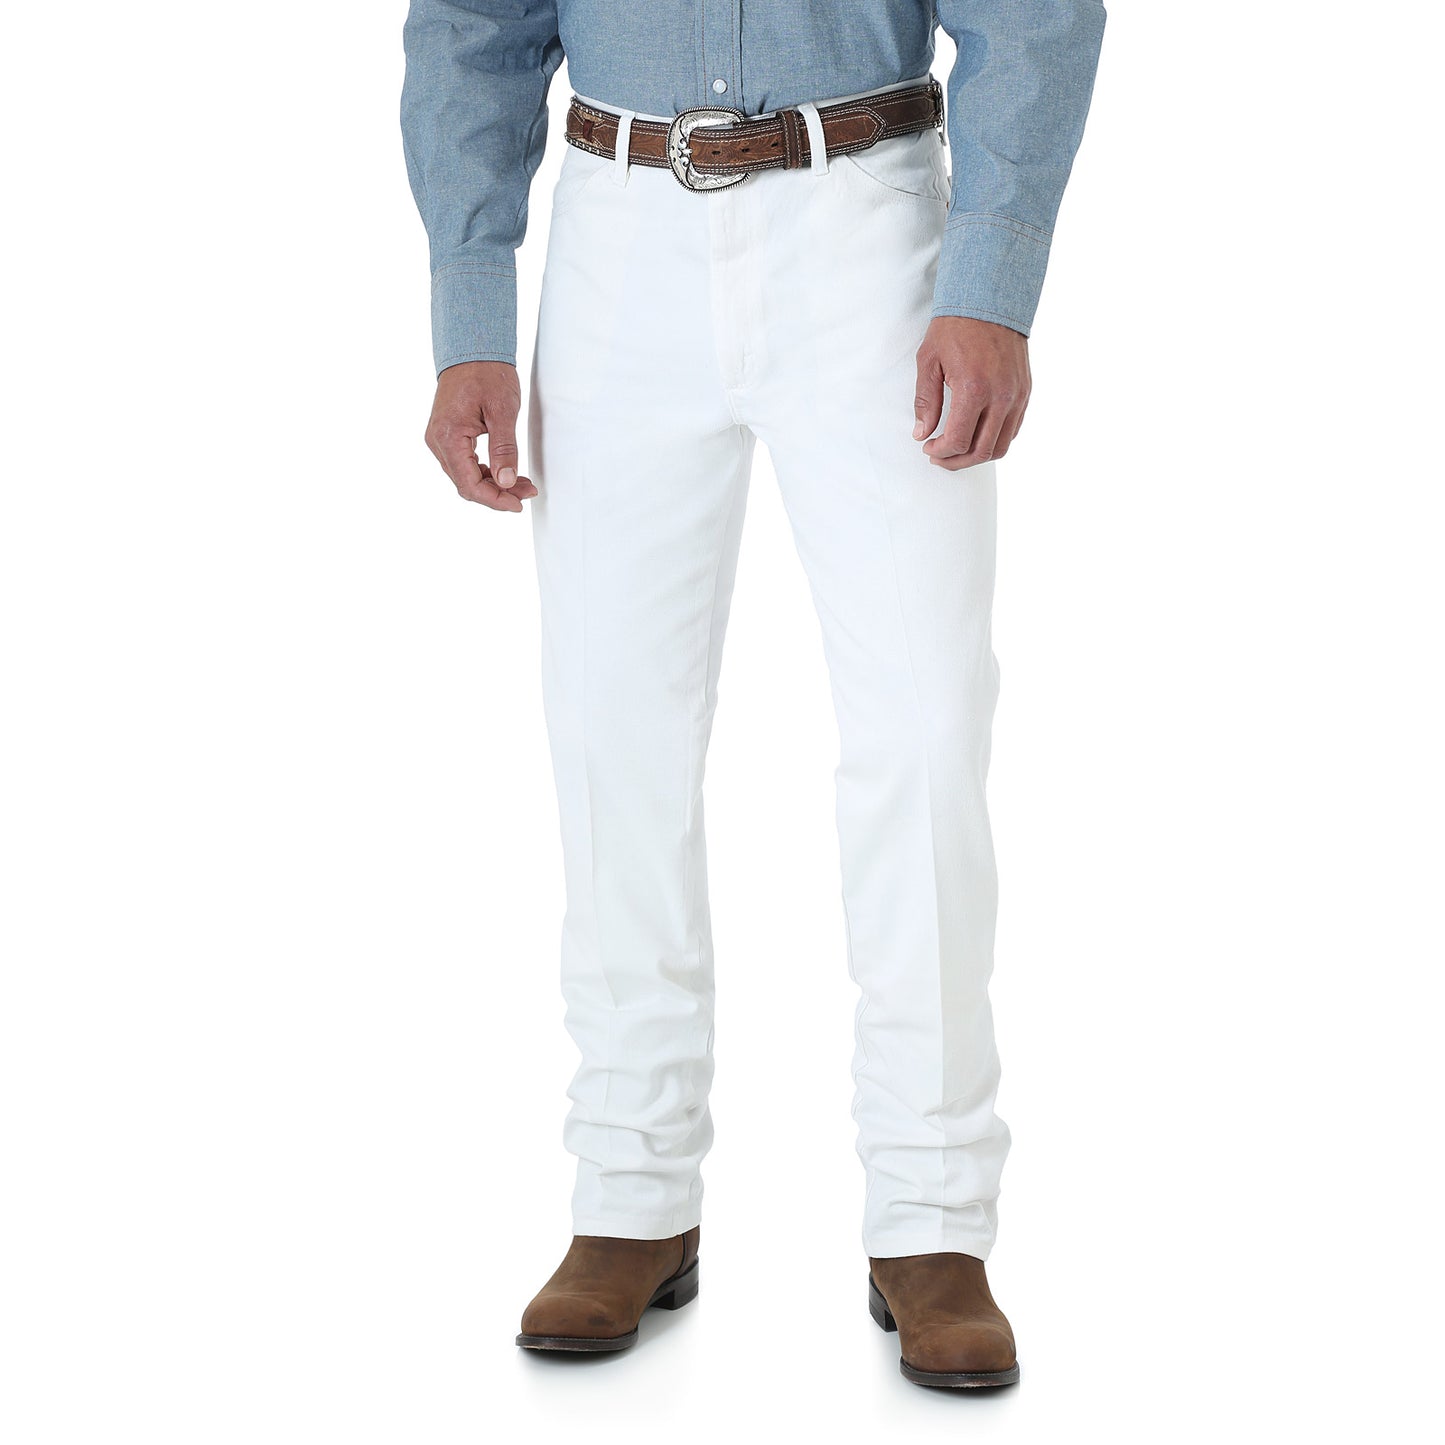 Wrangler 0936 Cowboy Cut Slim Fit Jean